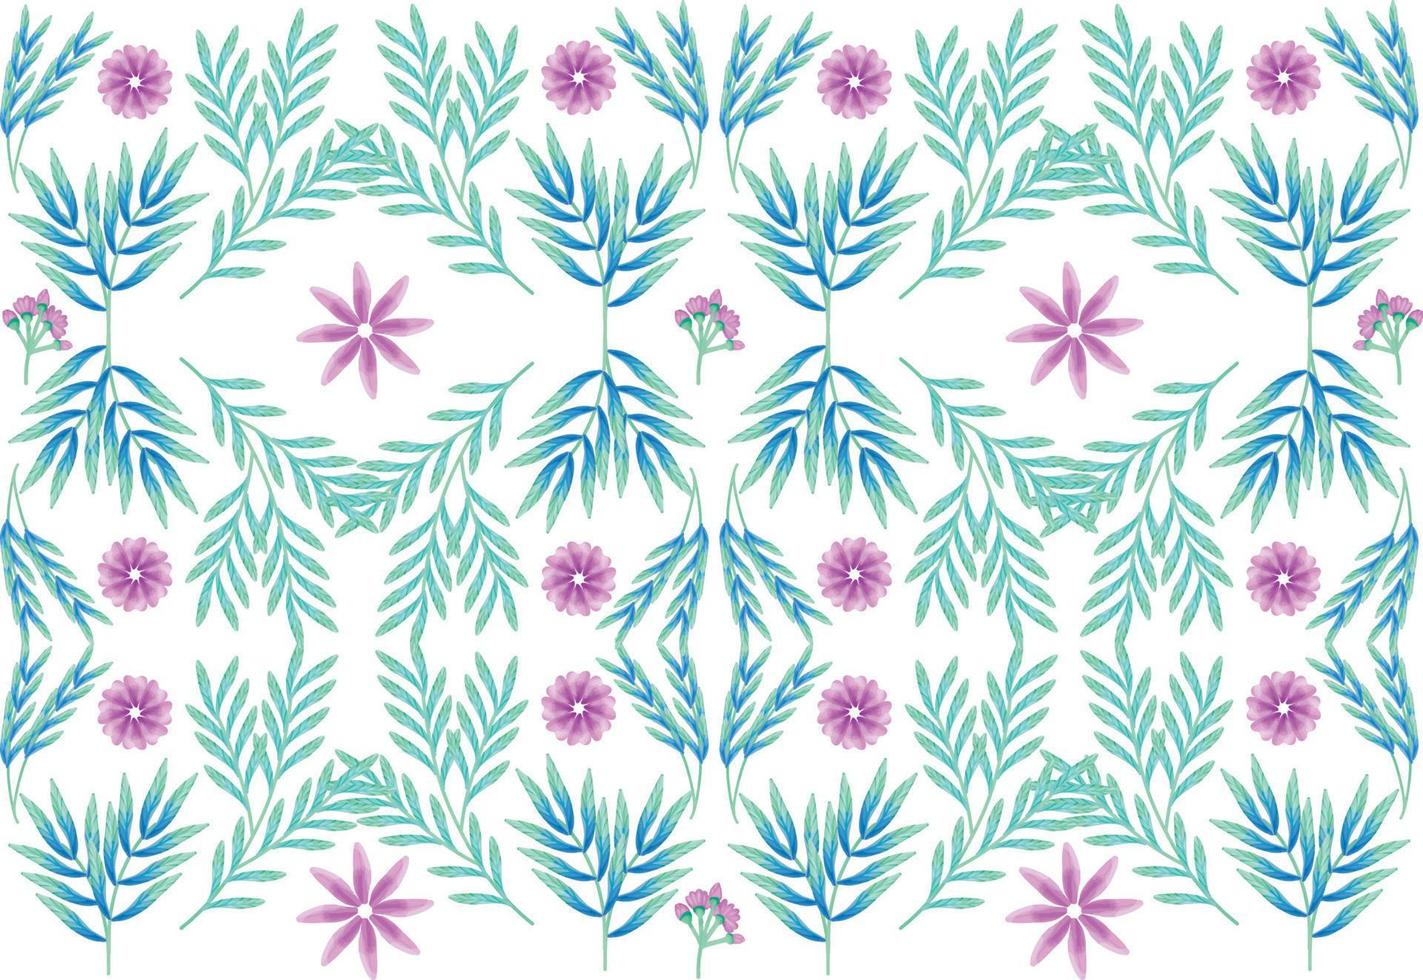 Watercolor flowers pattern vector